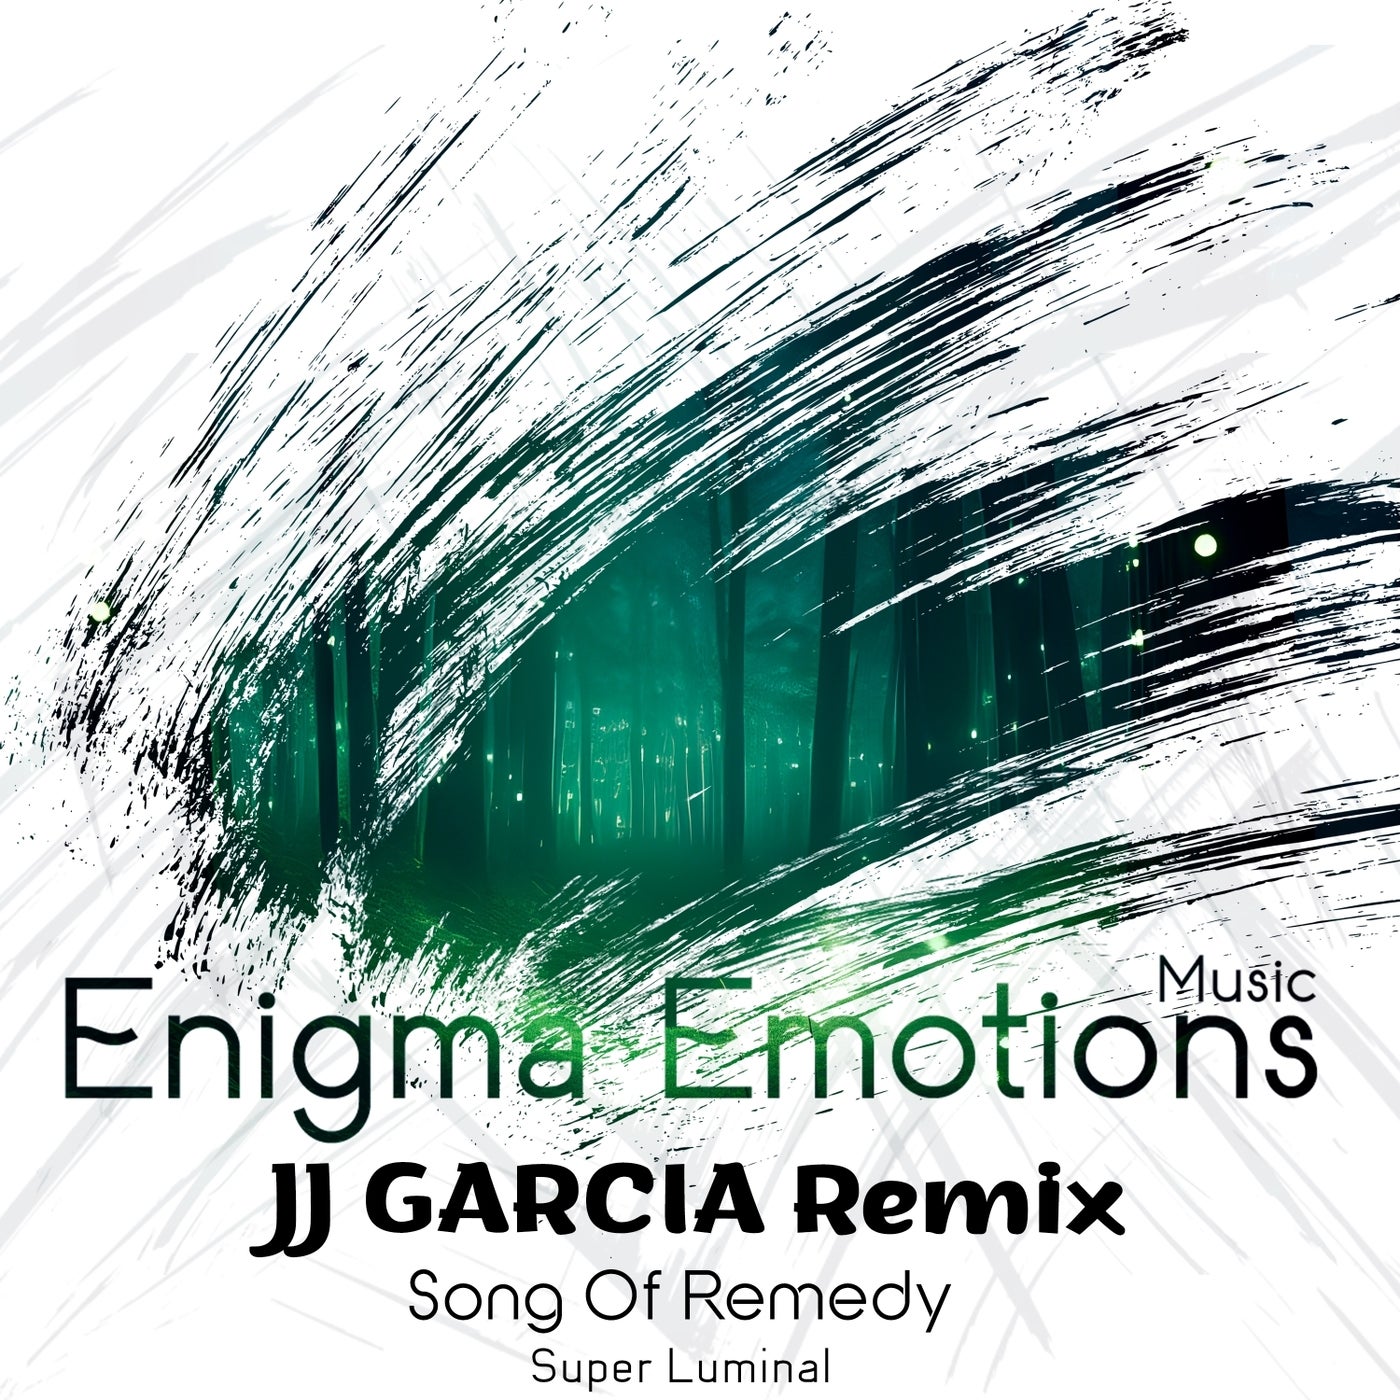 Song of Remedy (Jj Garcia Remix)